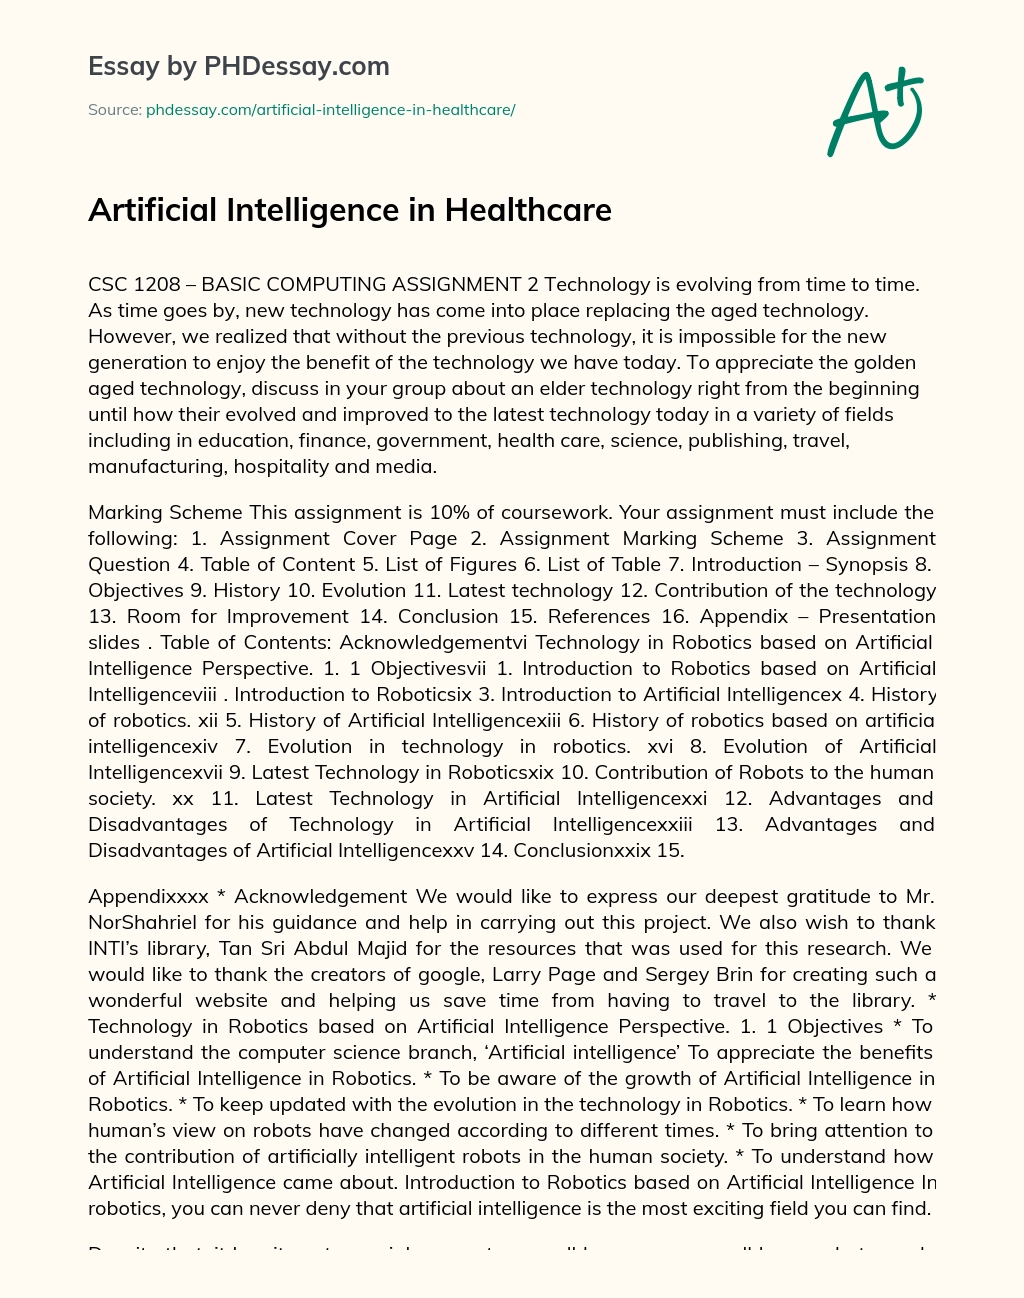 Artificial Intelligence in Healthcare essay